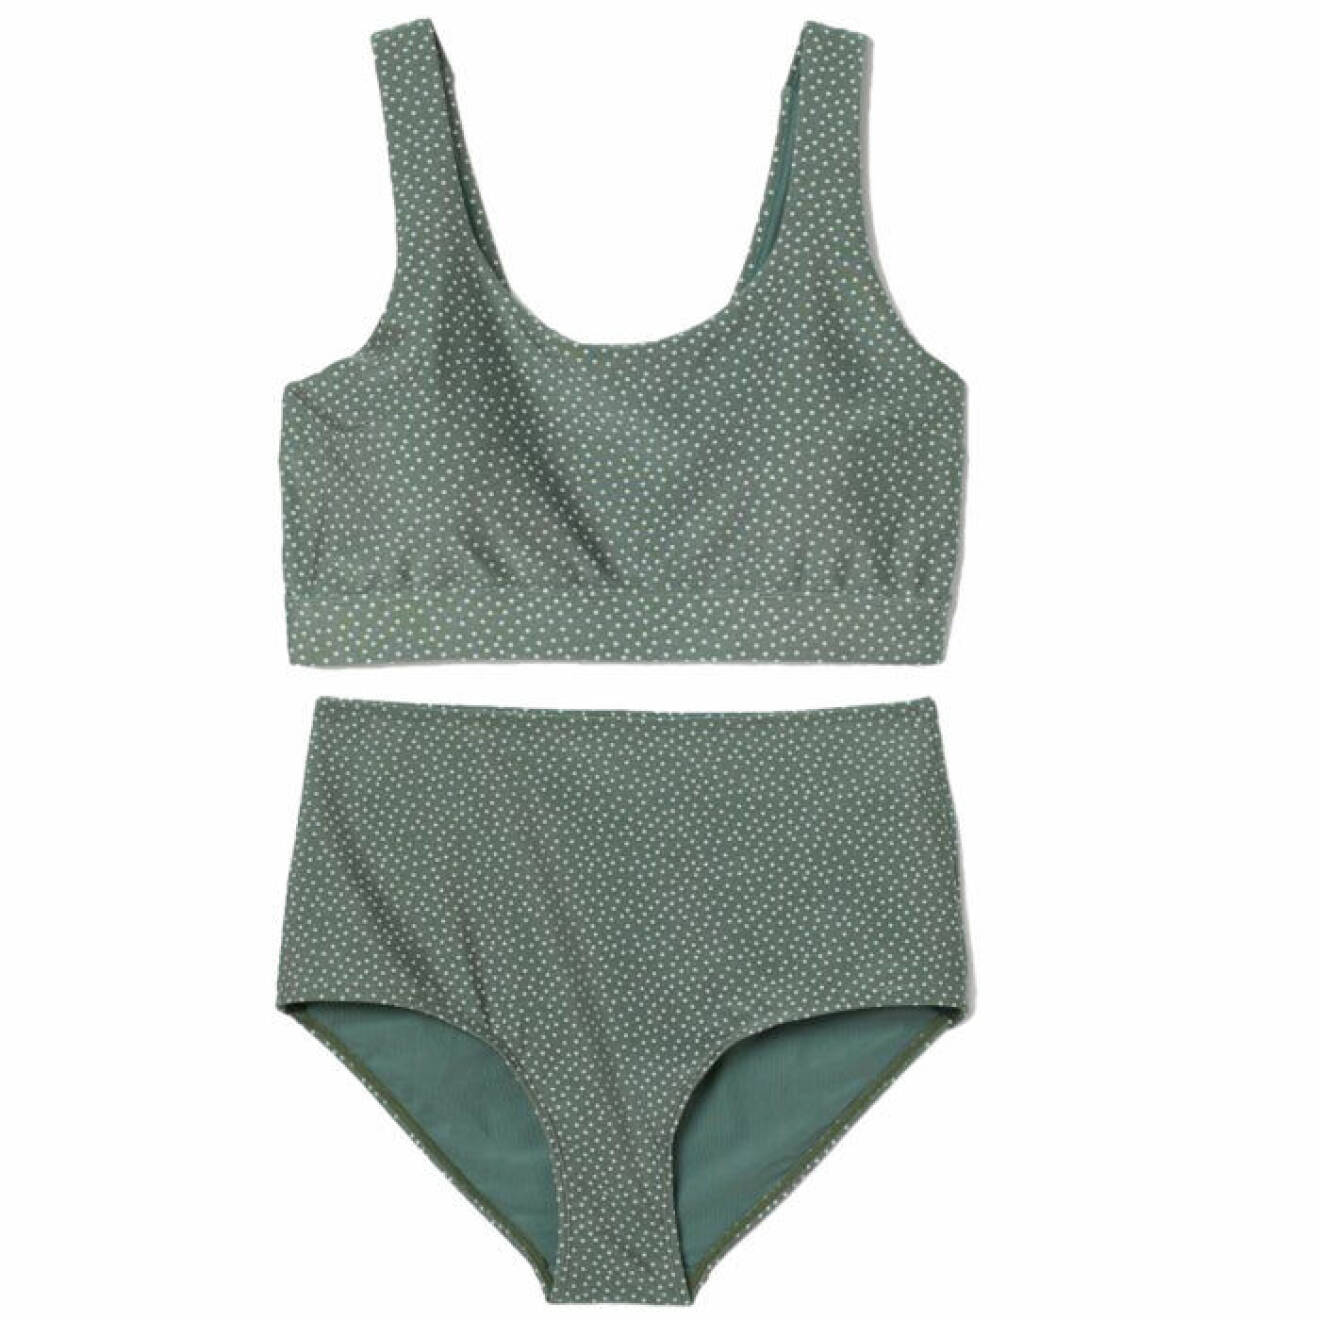 Grönvitprickig bikini från H&M